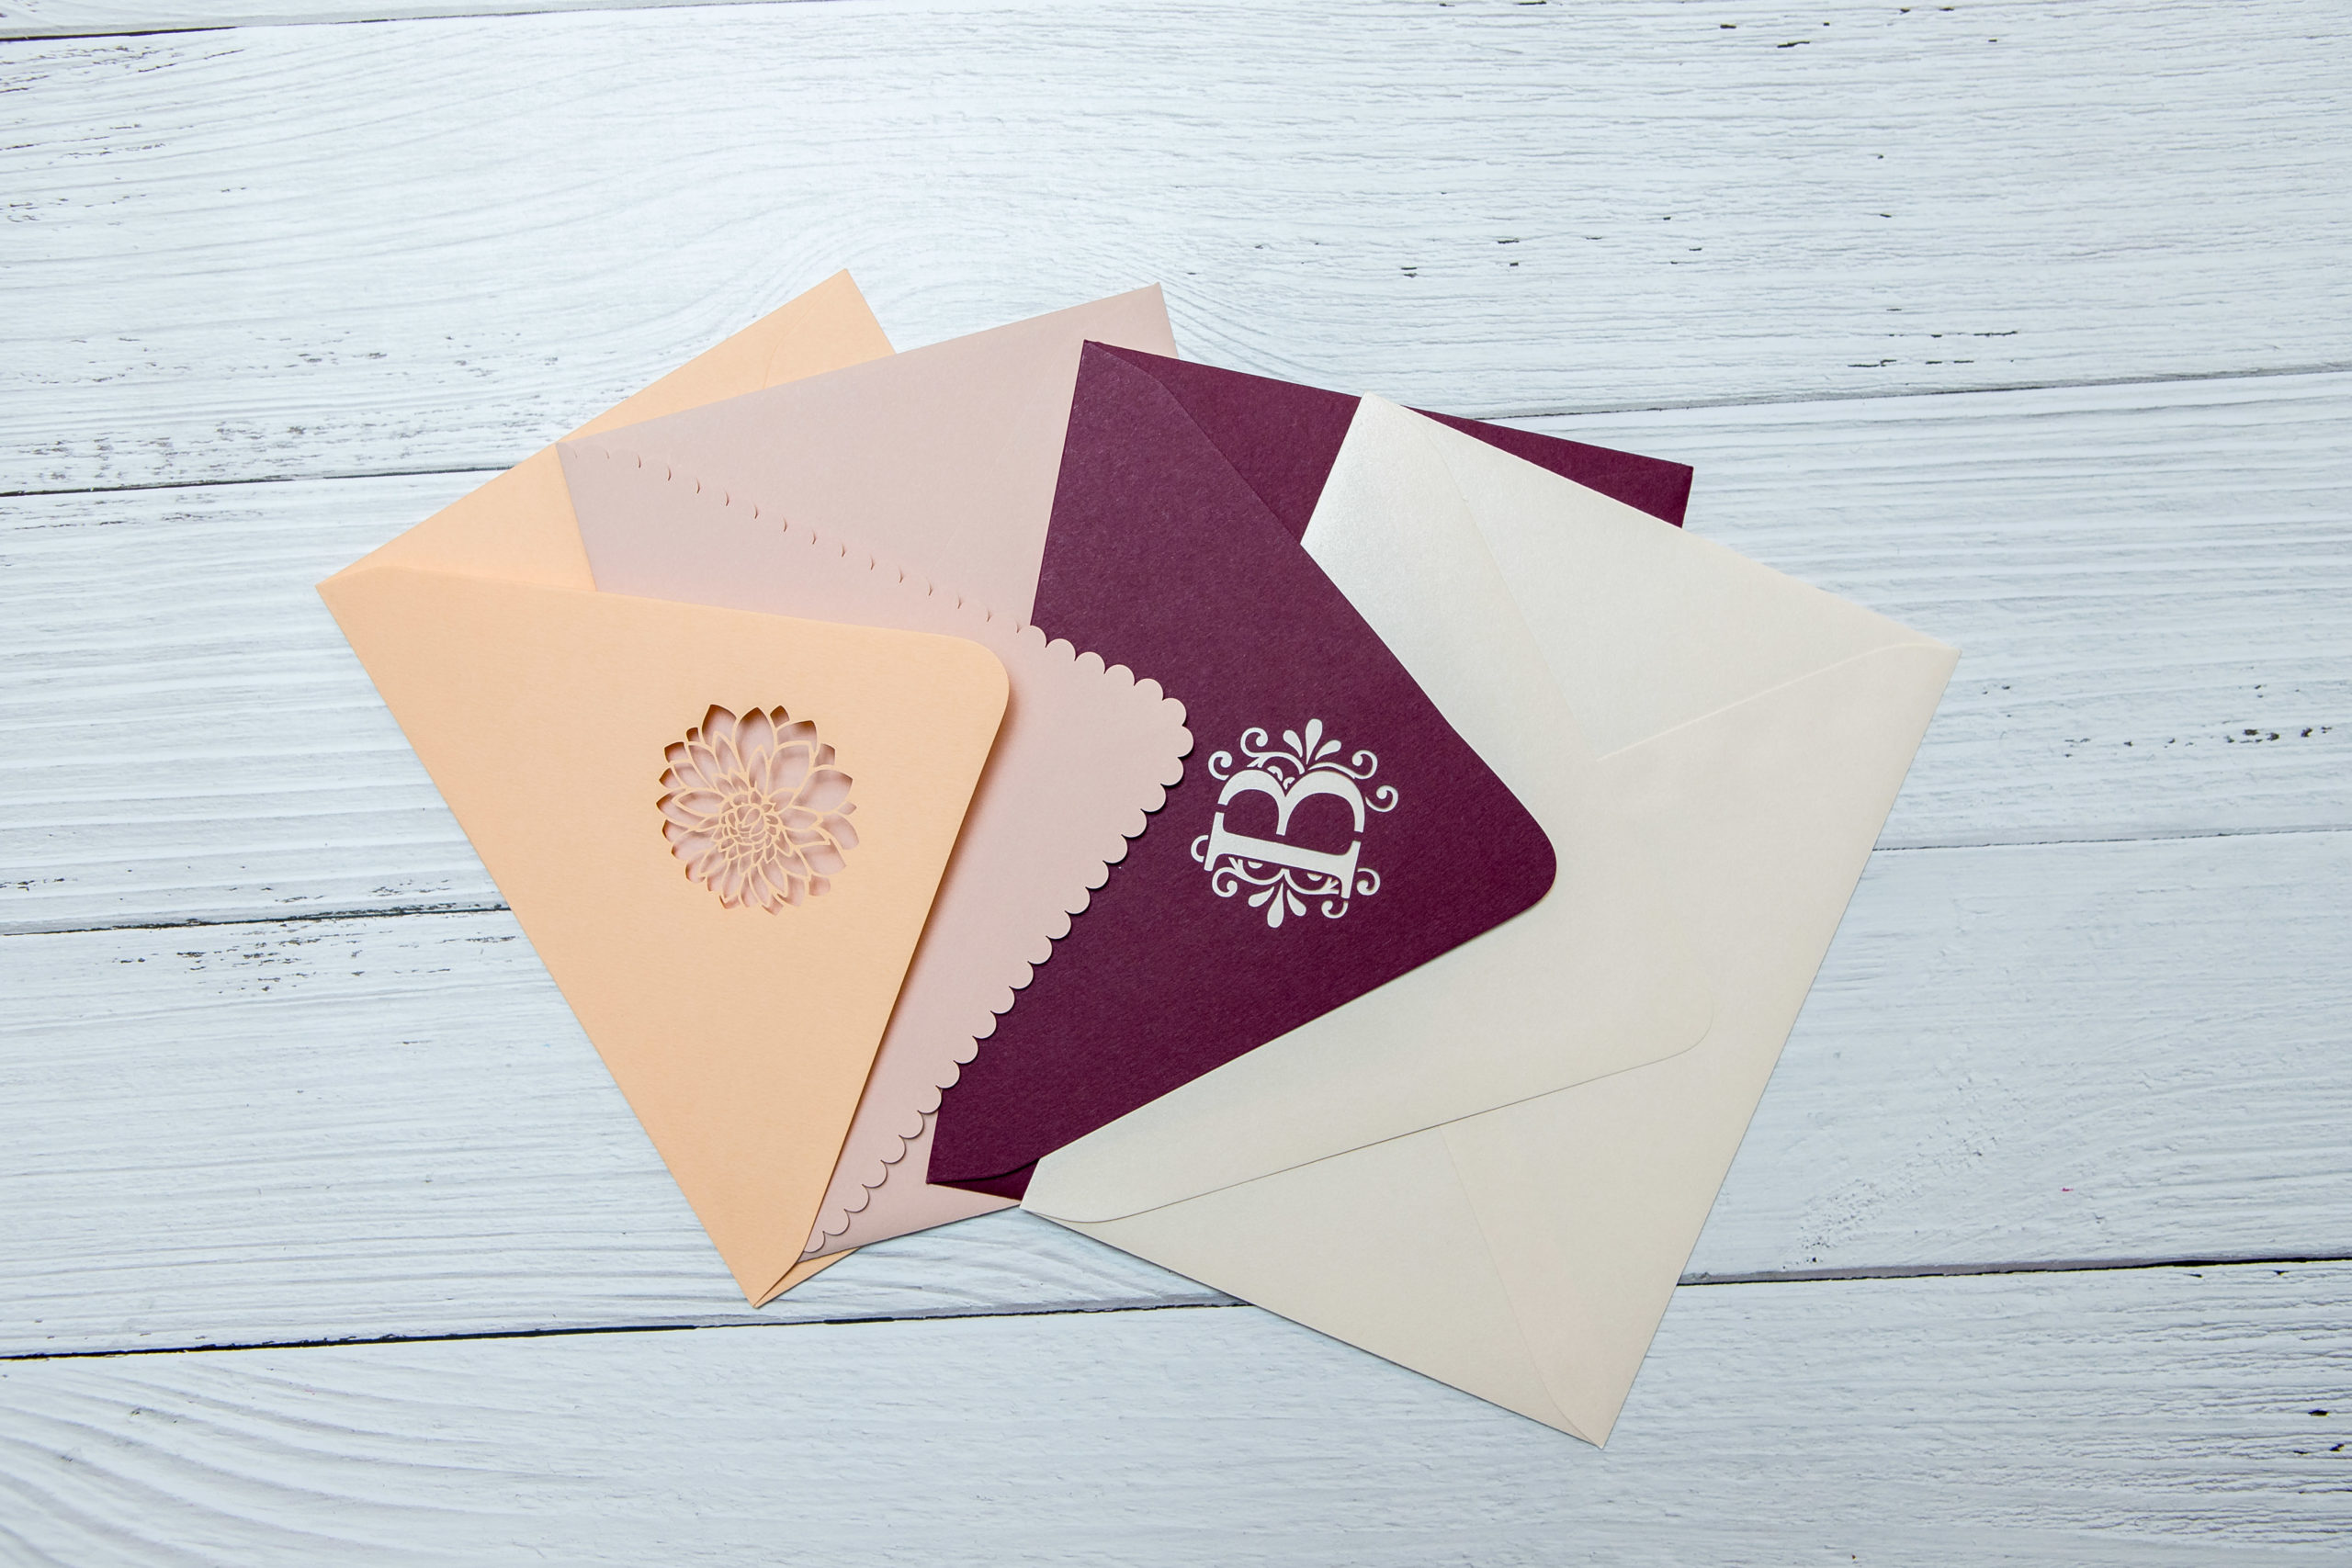 four die cut envelopes in warm colors